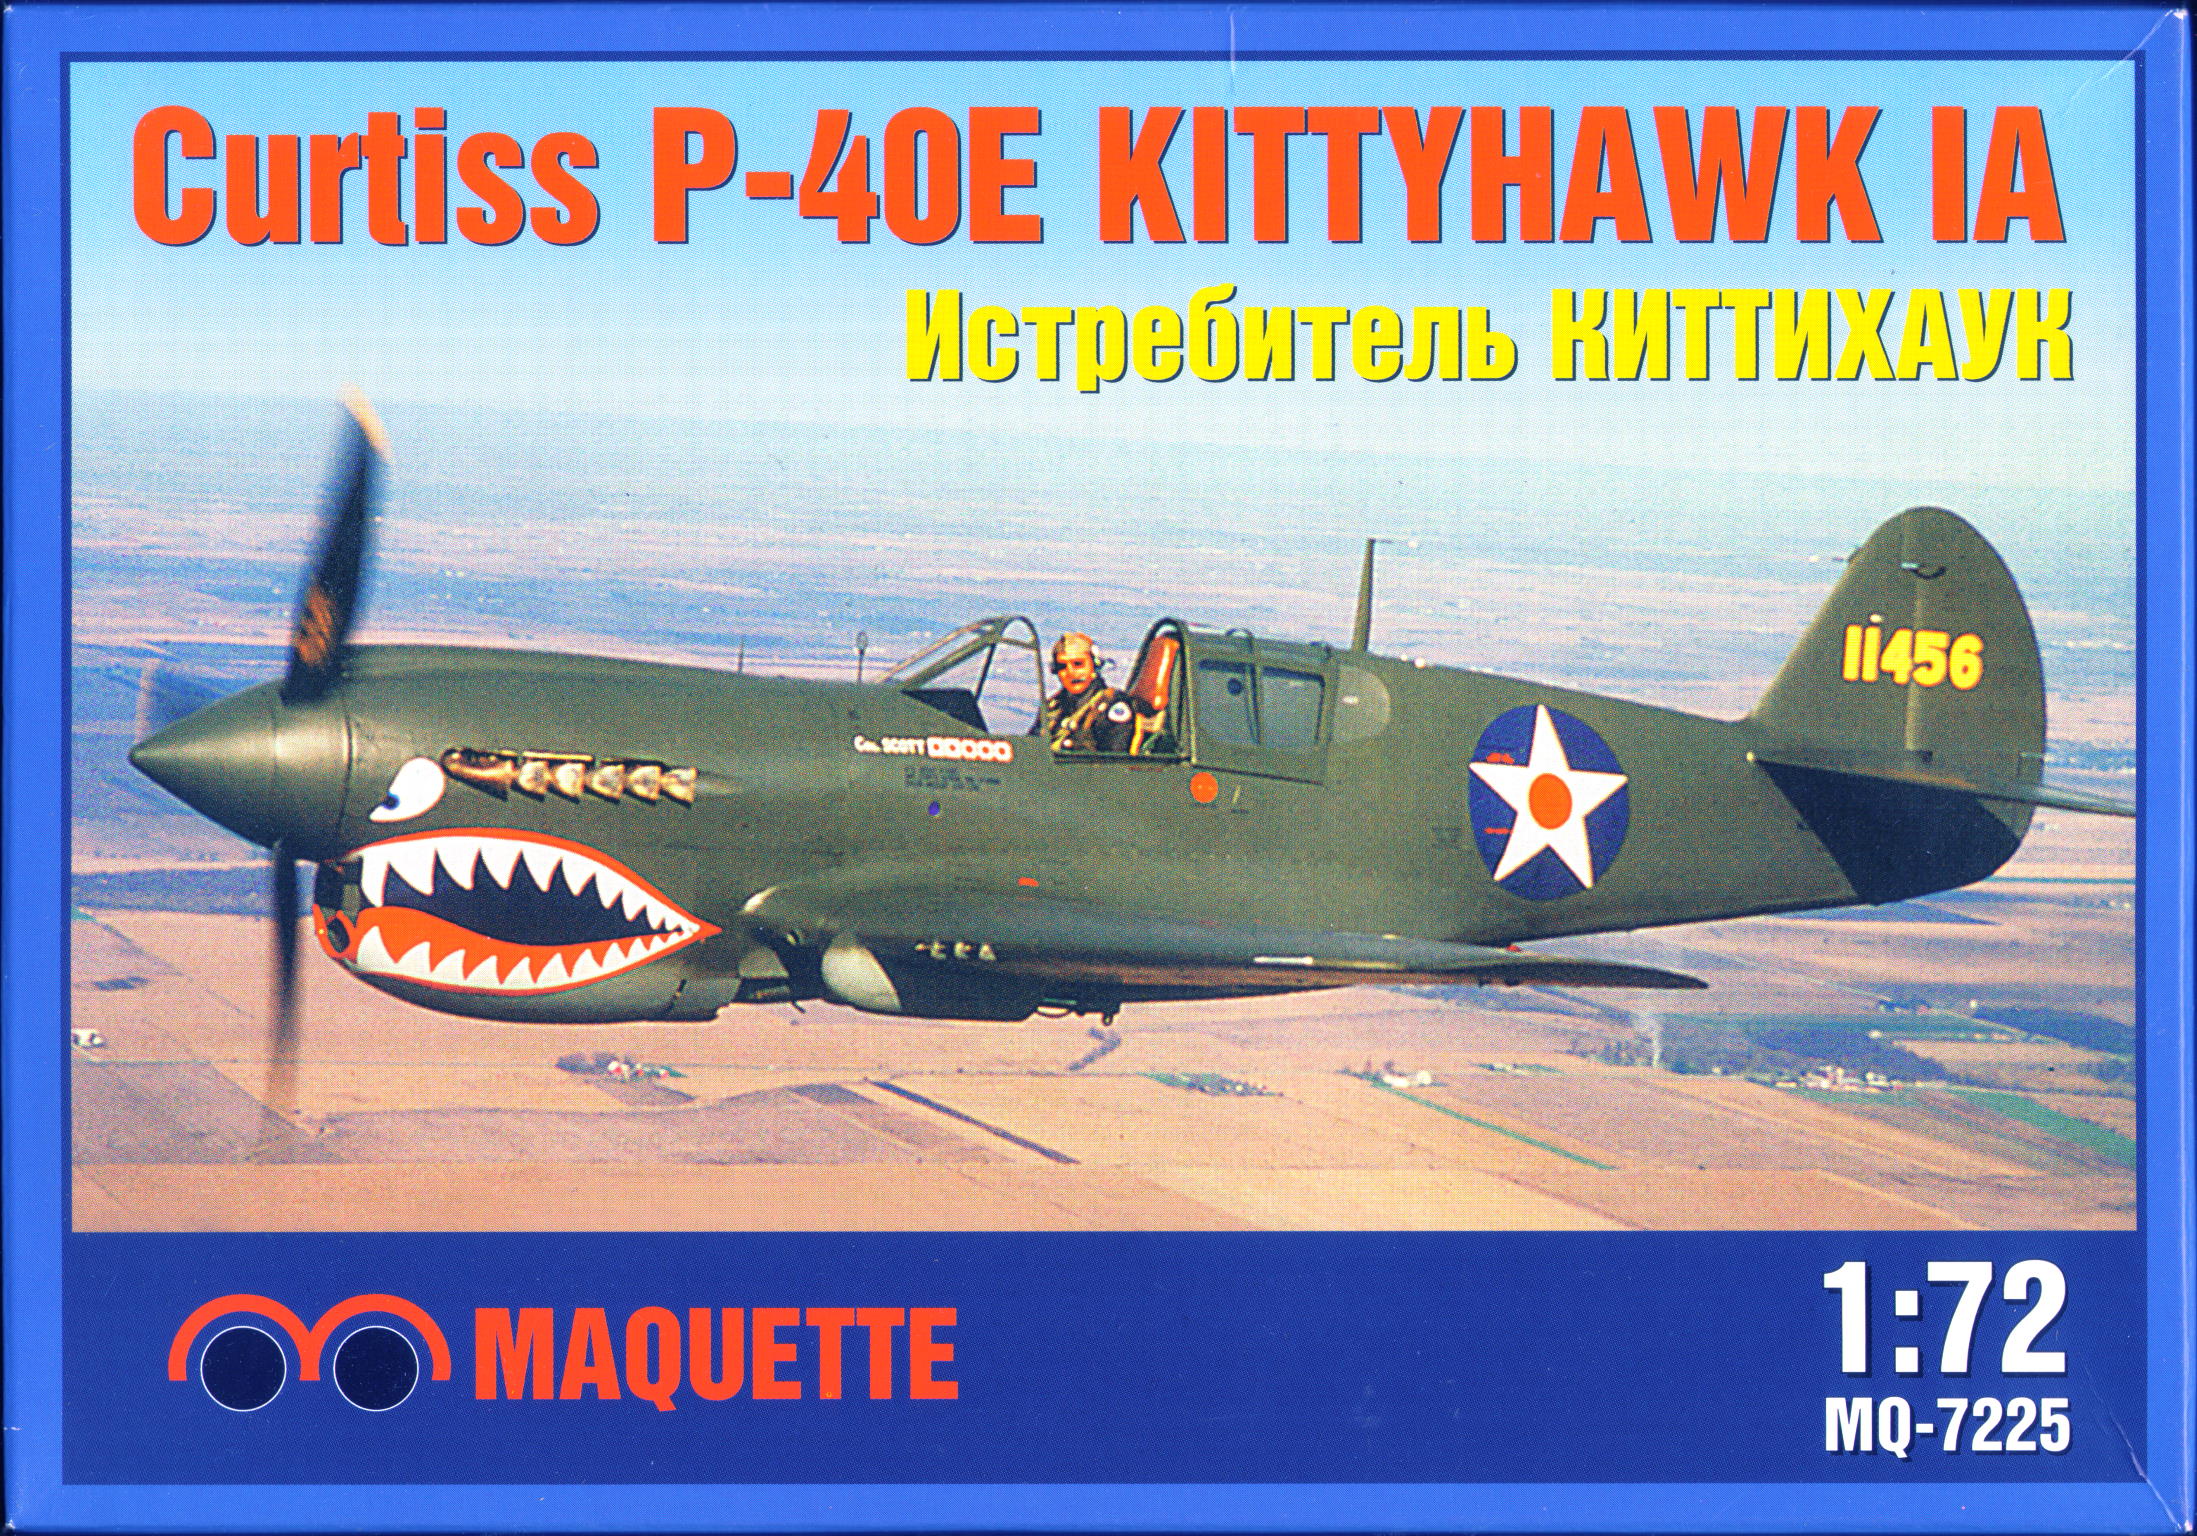 Box Maquette Curtiss P-40E Kittyhawk IA, MQ-7225, 2000-s